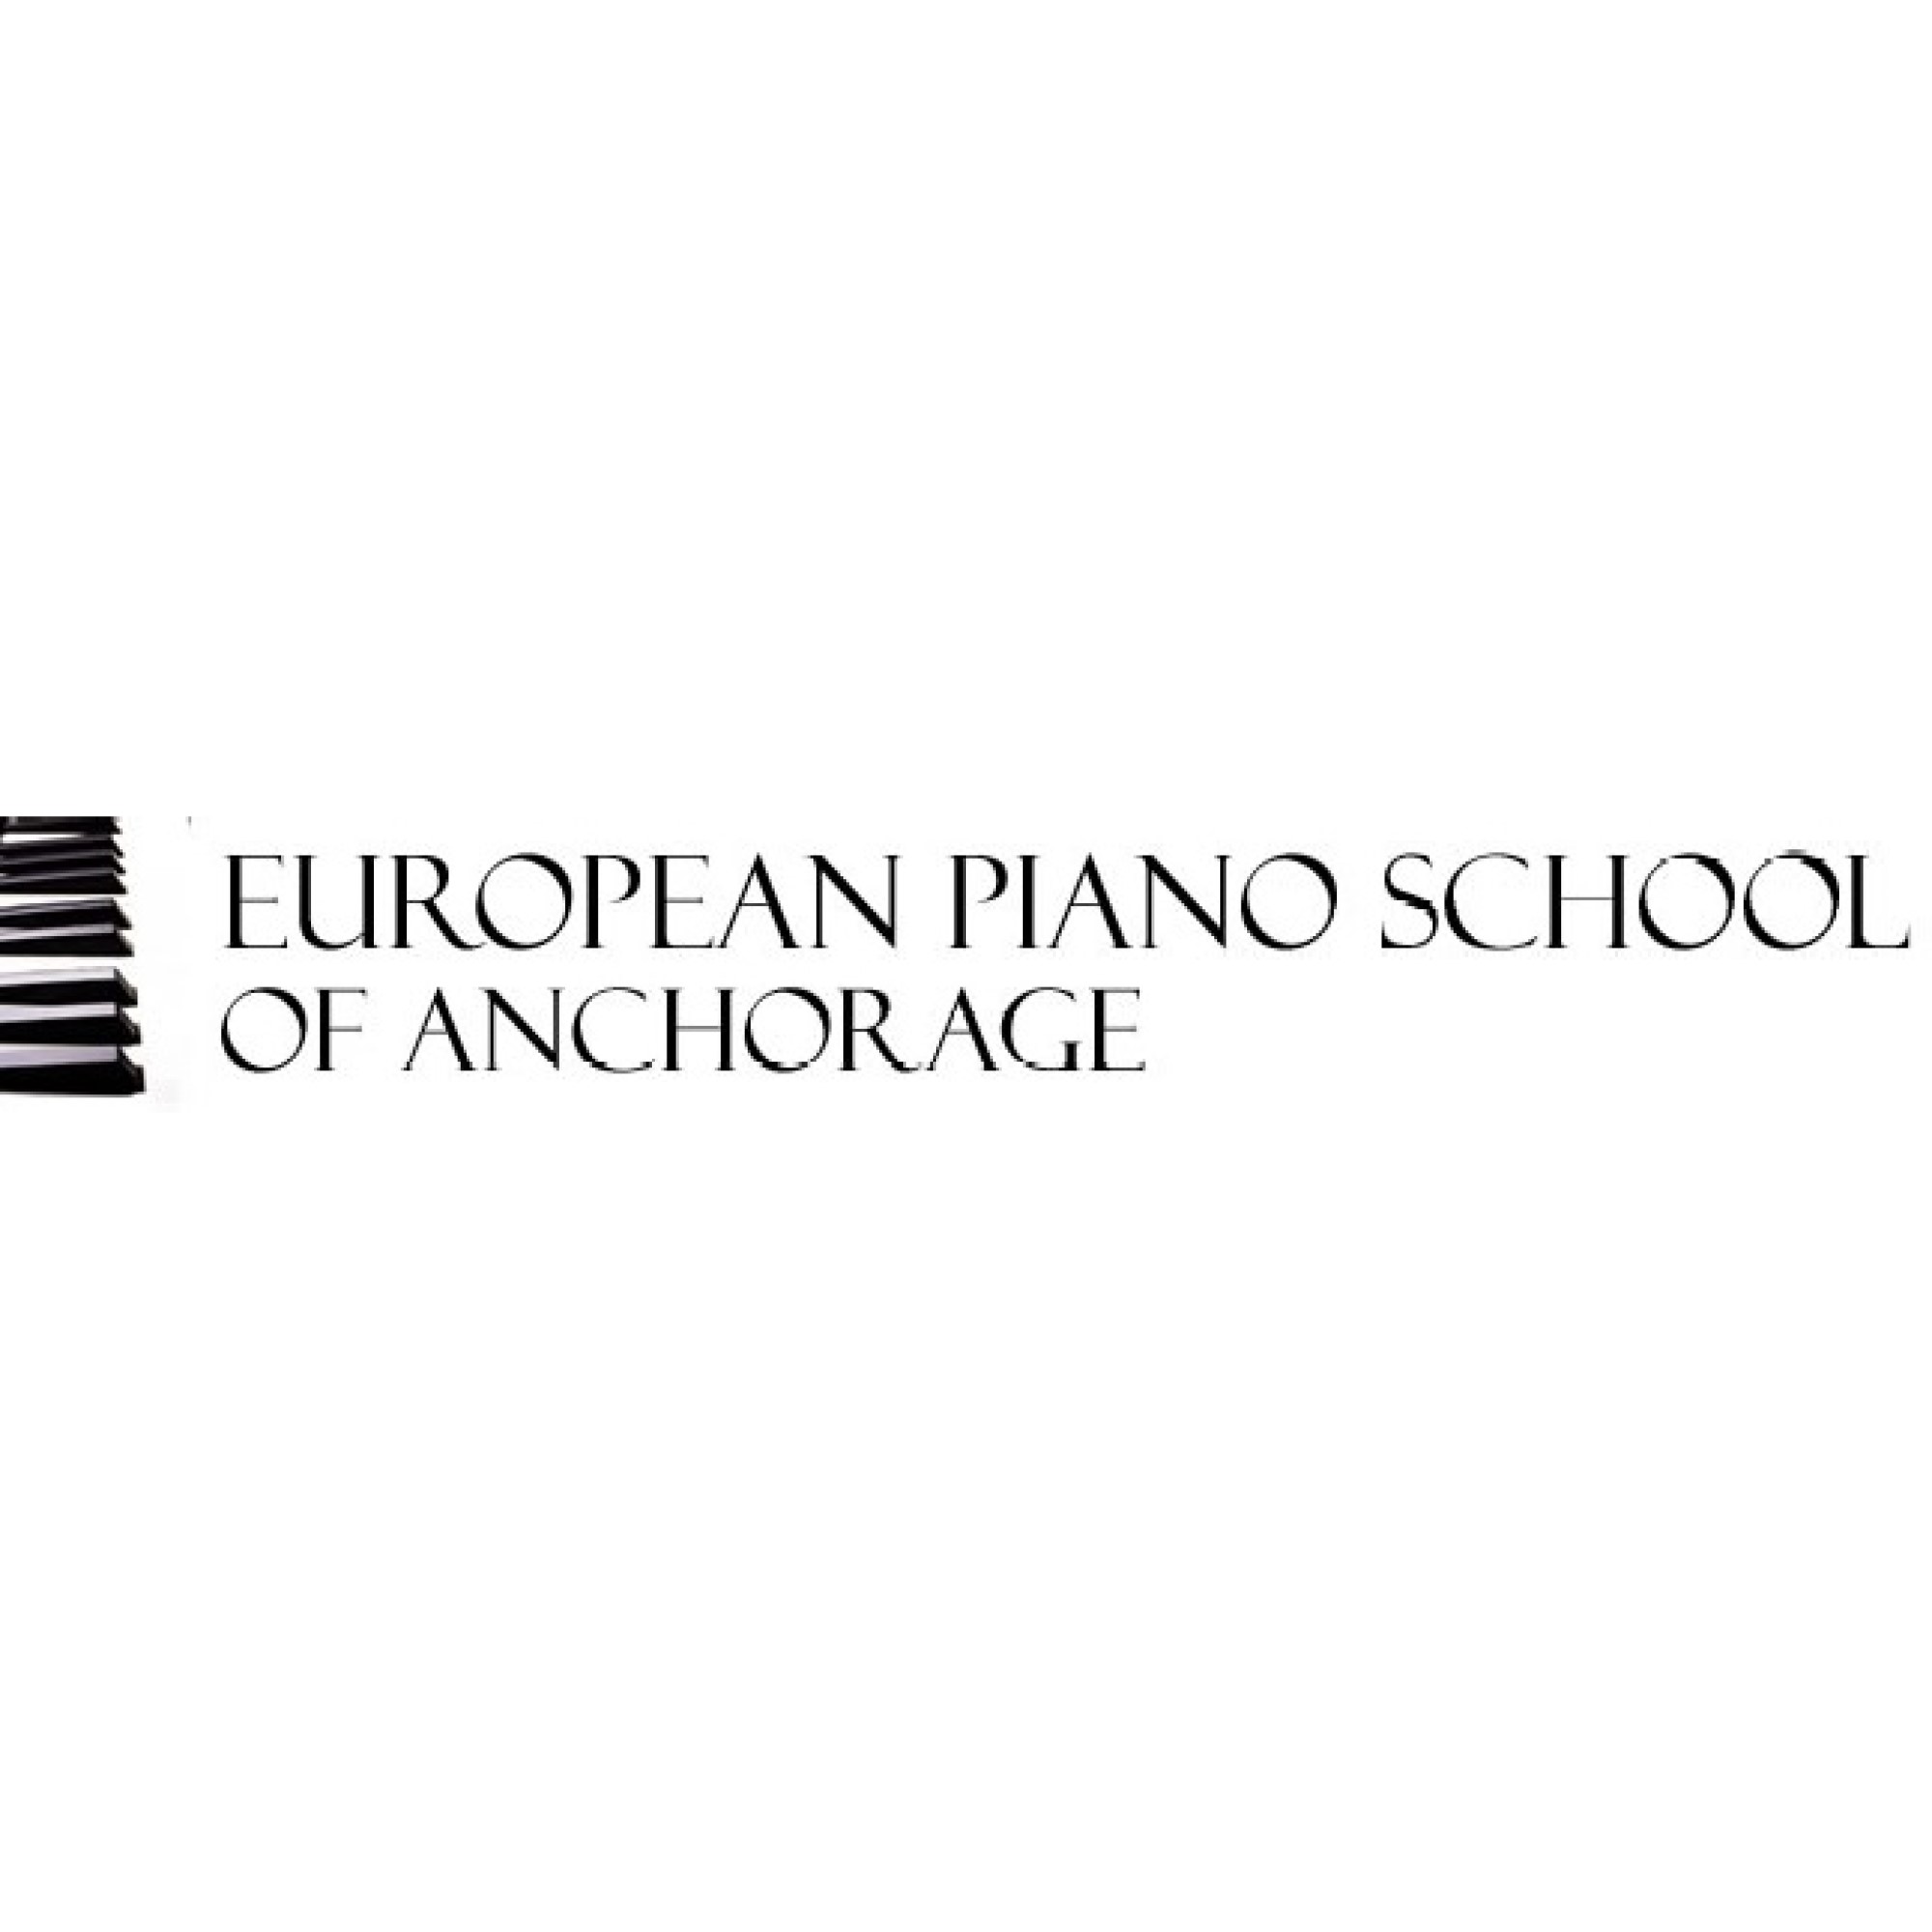 European Piano School - Anchorage, AK 99501 - (907)360-2915 | ShowMeLocal.com